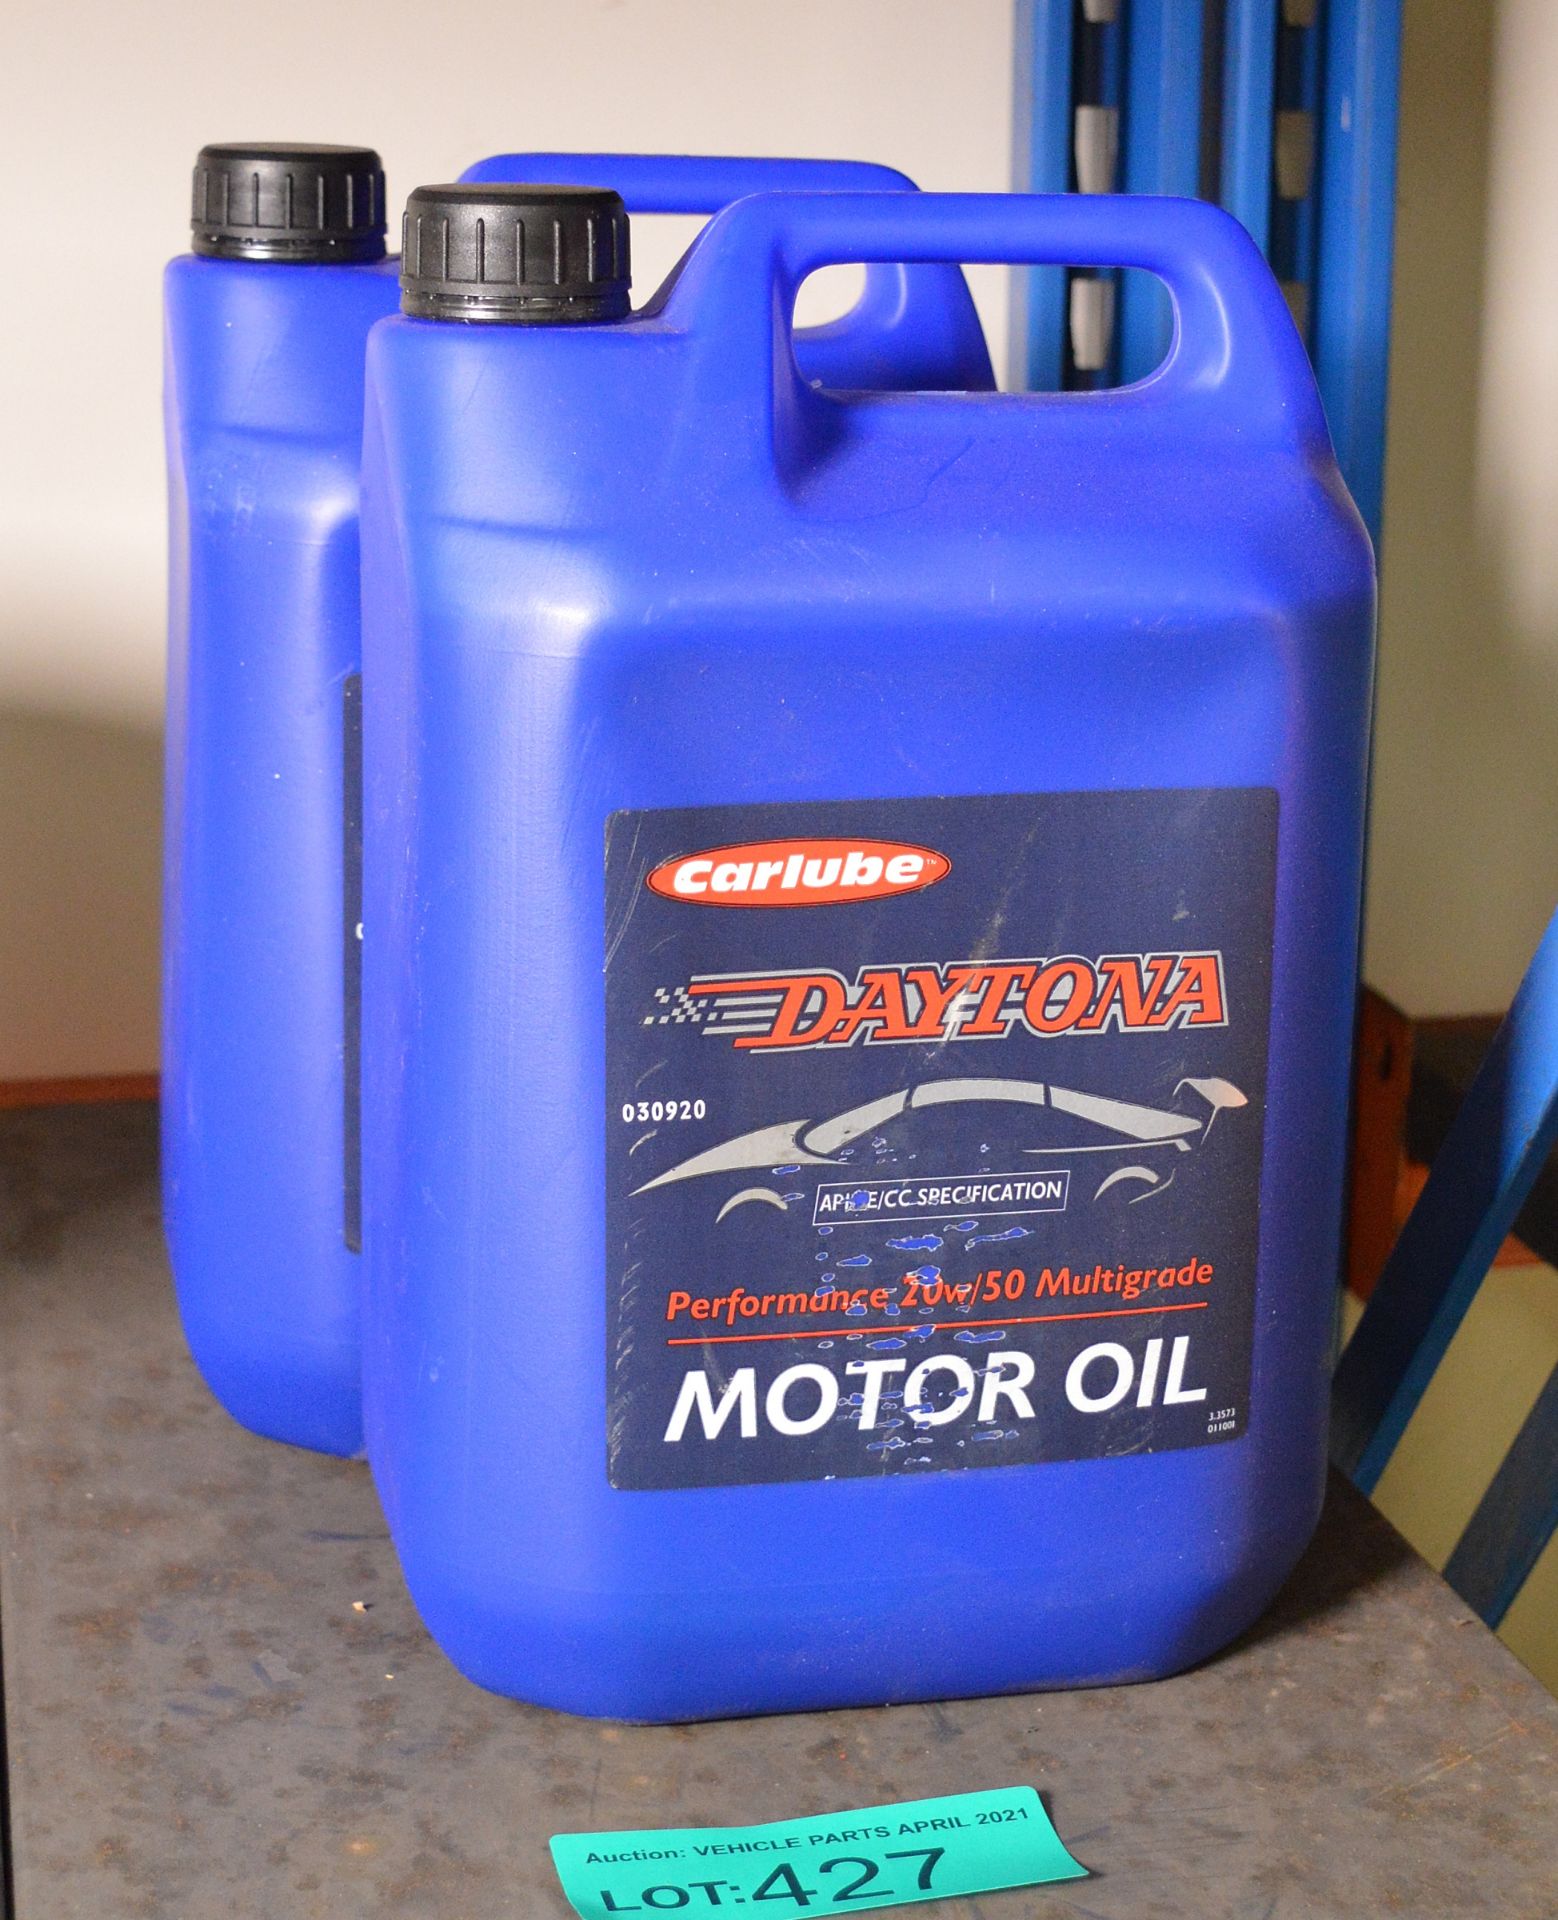 2x Carlube Daytona 20W/50 Motor Oil - 4.55 litre - Image 2 of 3